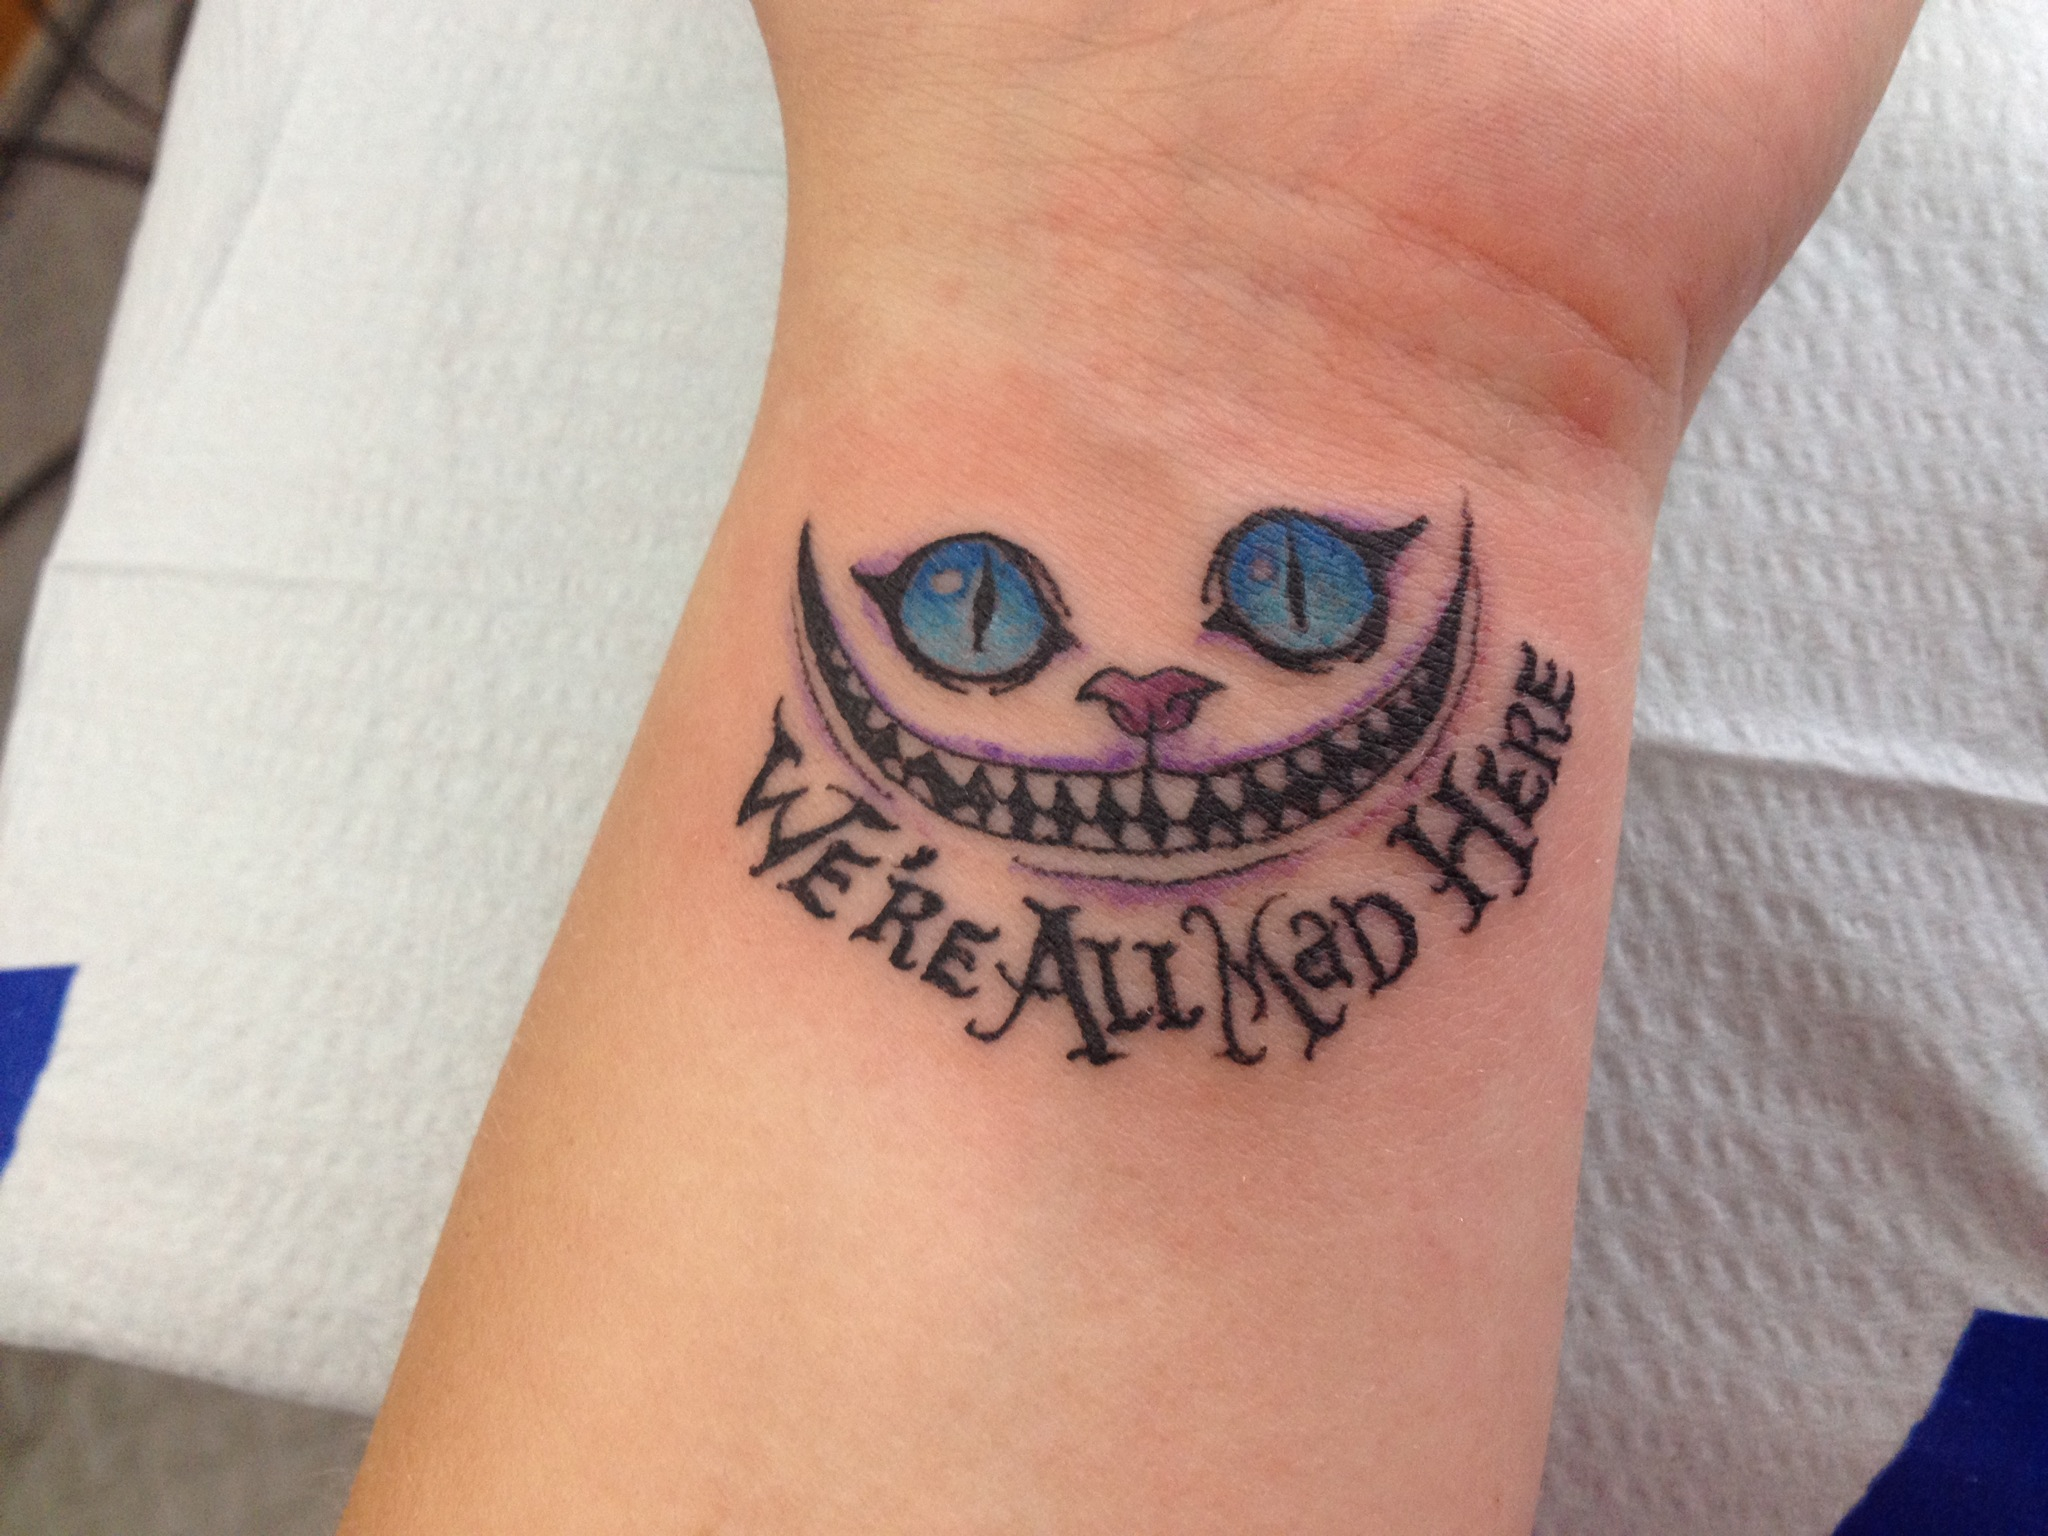 Fully healed UV Blacklight tattoo of Cheshire Cat Alice in Wonderland  tatuointi tattoofinland tatuointivantaa tattooeurope tattooworld   By Mamanna Tatskaa Dextera Dei Tattoo  Facebook